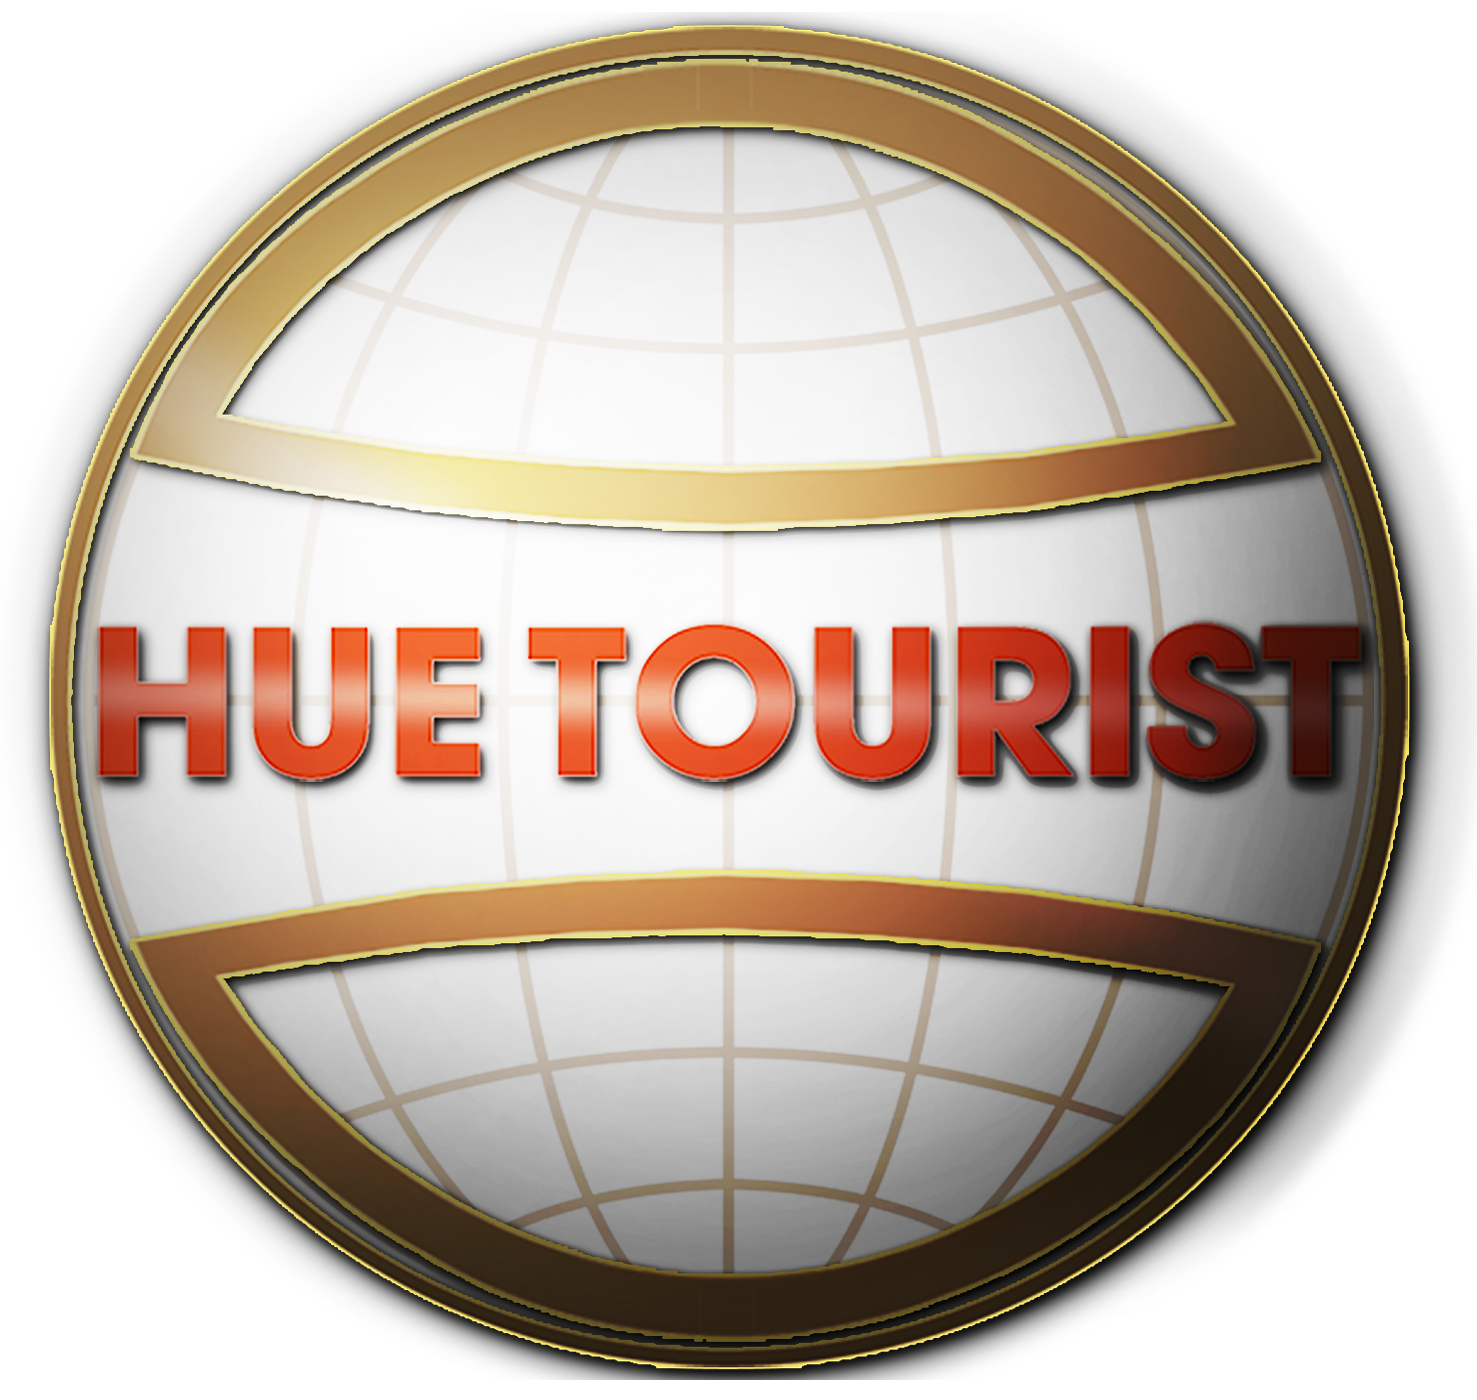 Hue Tourist